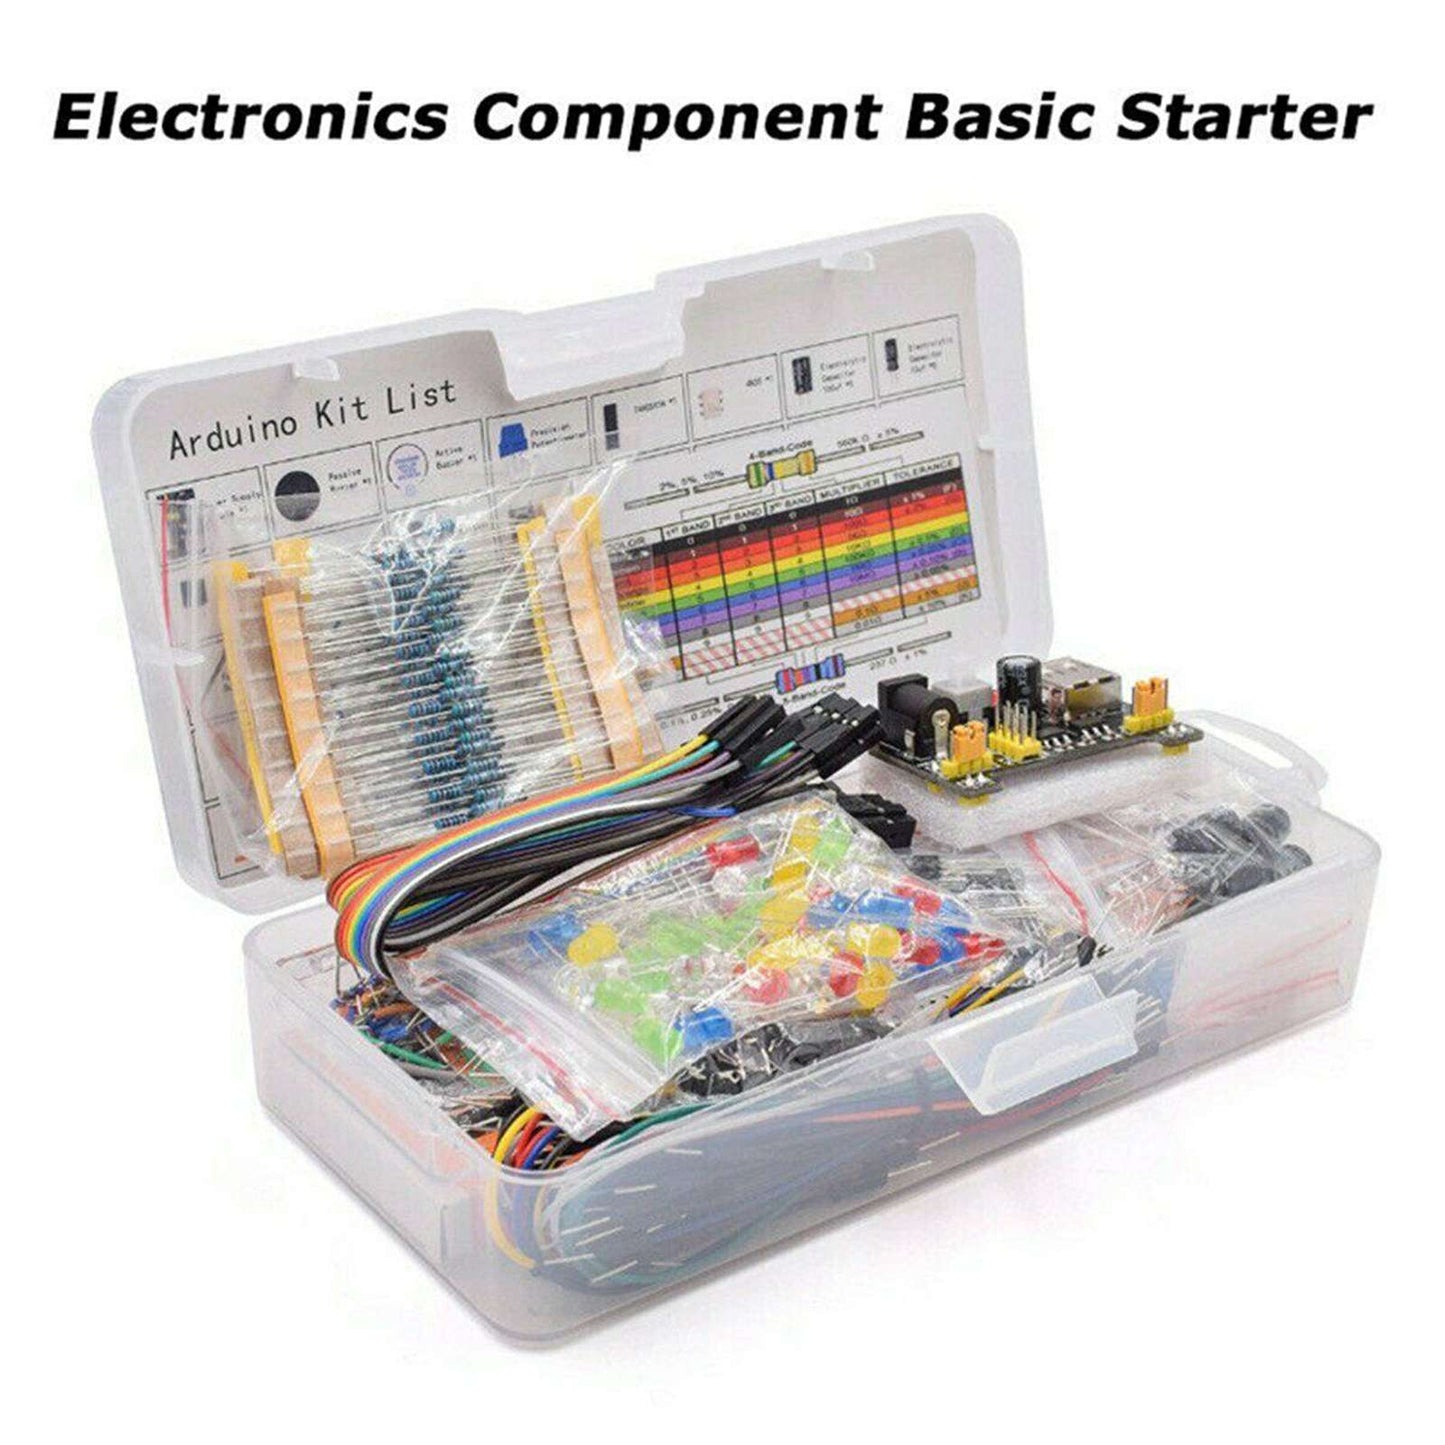 Ultimate Starter UNO R3 Kit Elektronik Projekt Baukasten Für Arduino Lernset